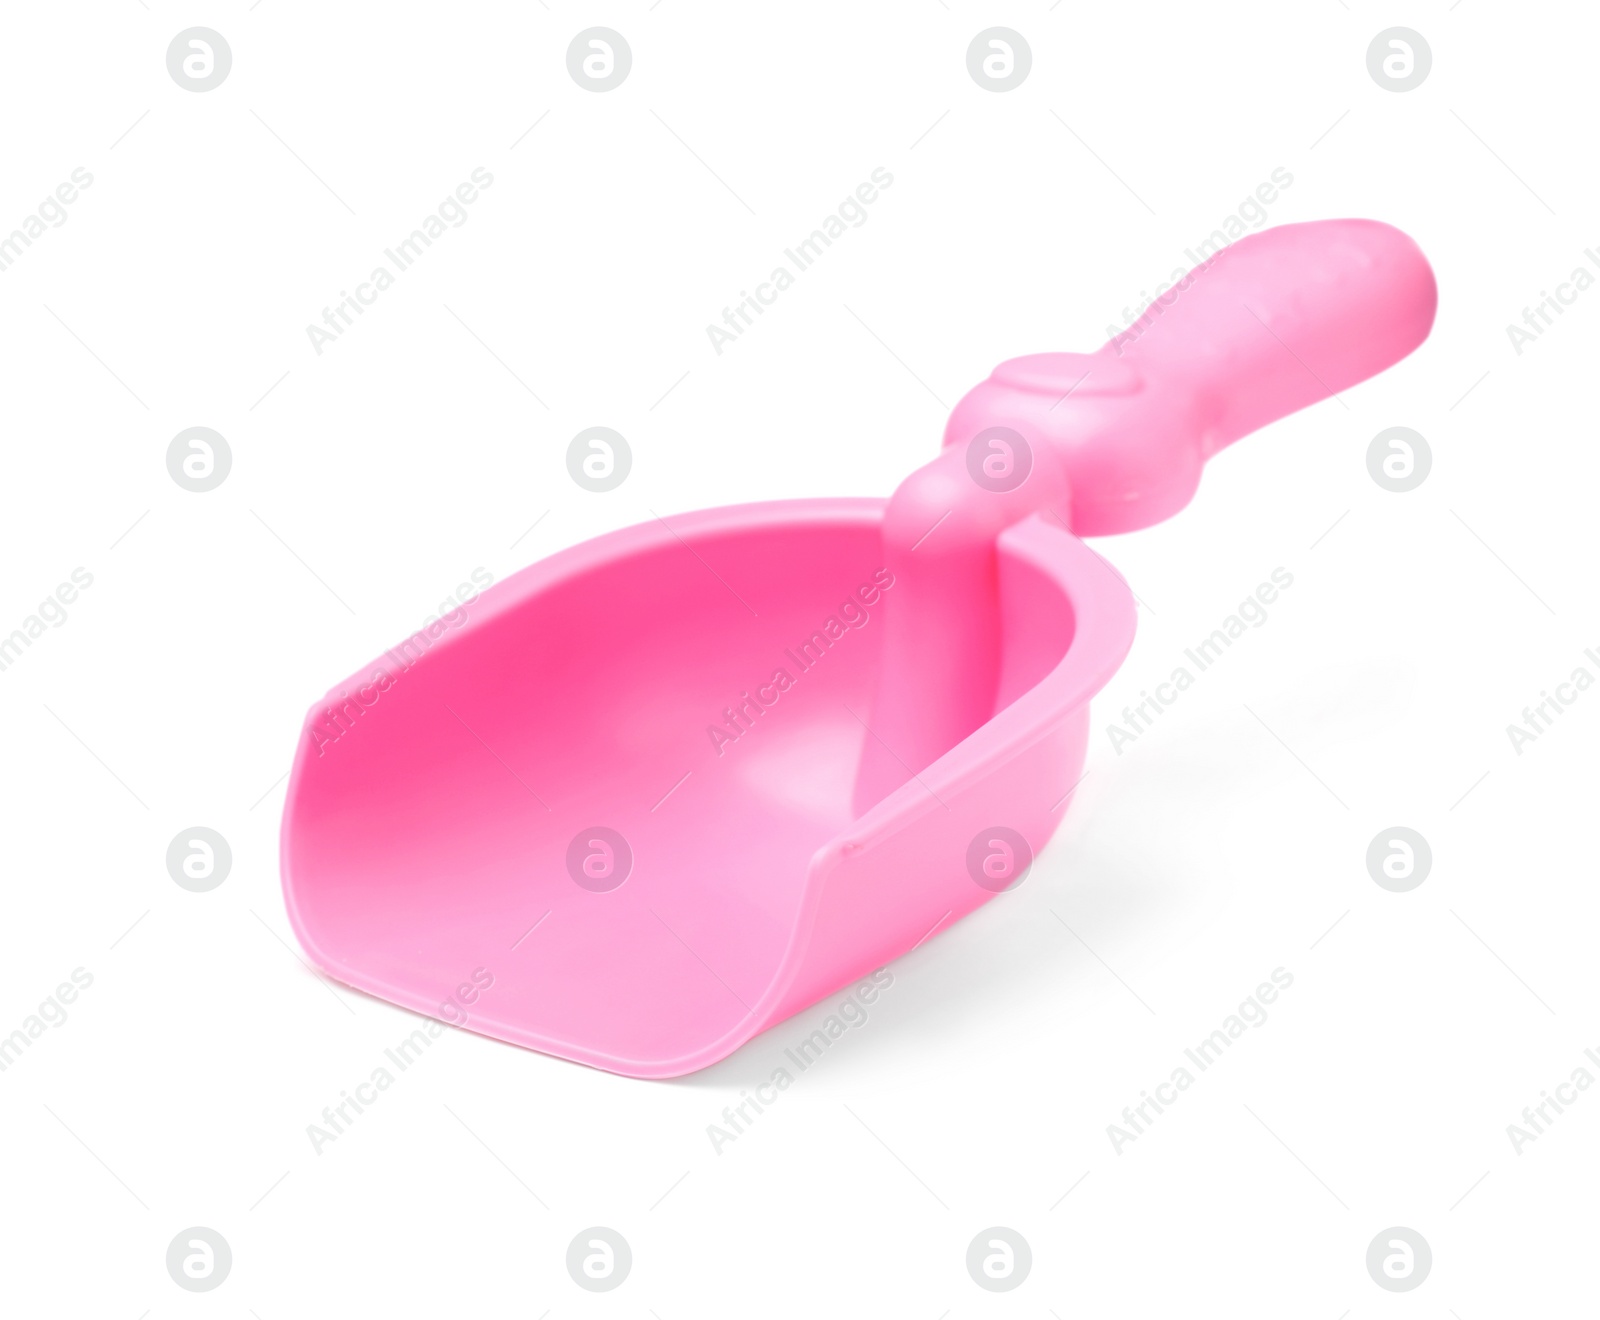 Photo of Pink plastic toy shovel isolated on white